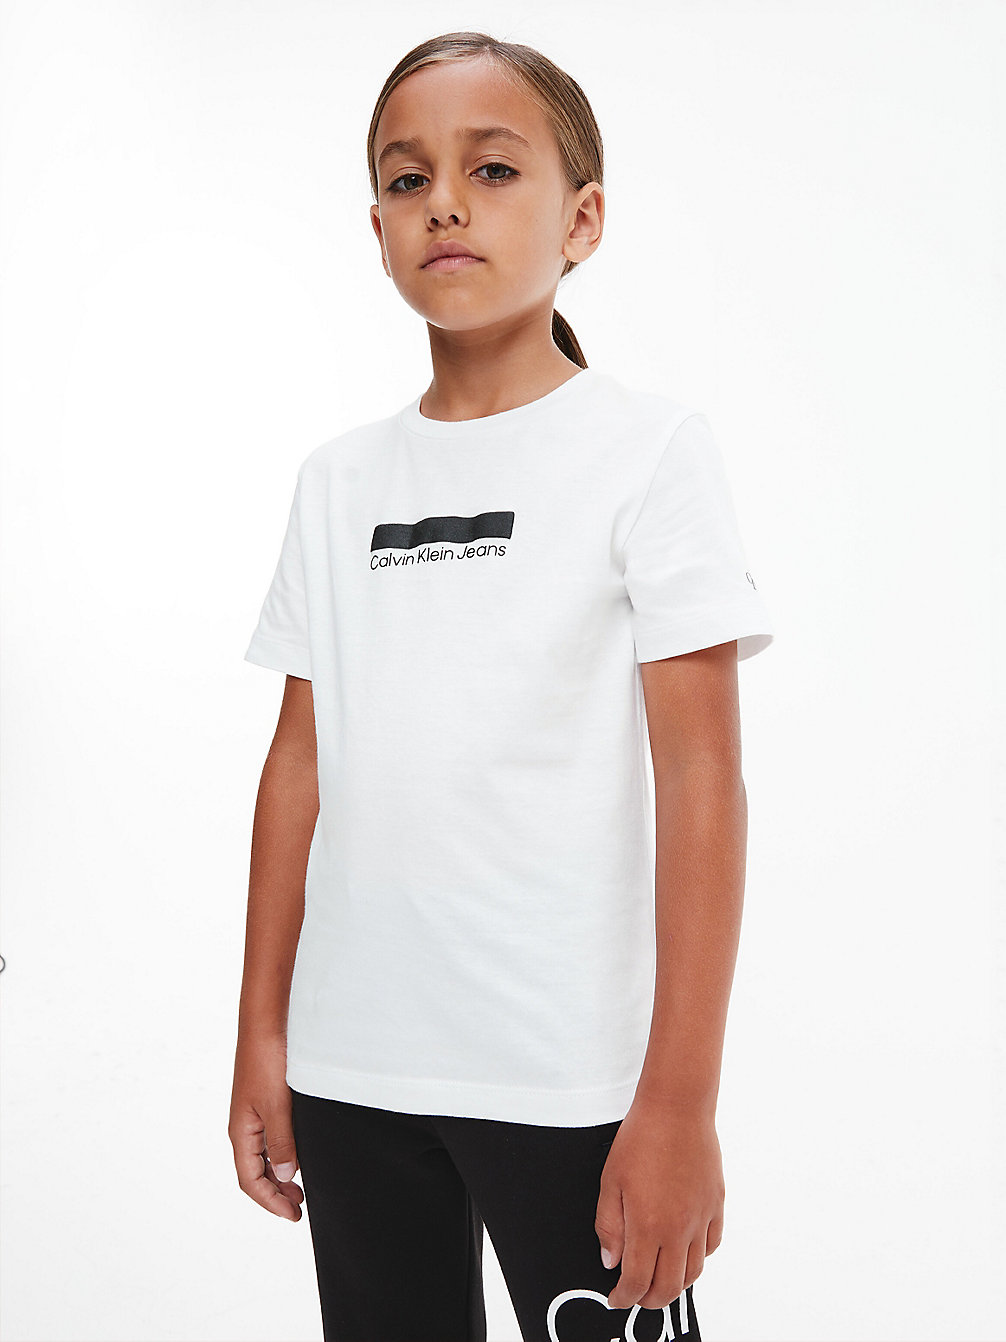 BRIGHT WHITE Organic Cotton T-Shirt undefined boys Calvin Klein